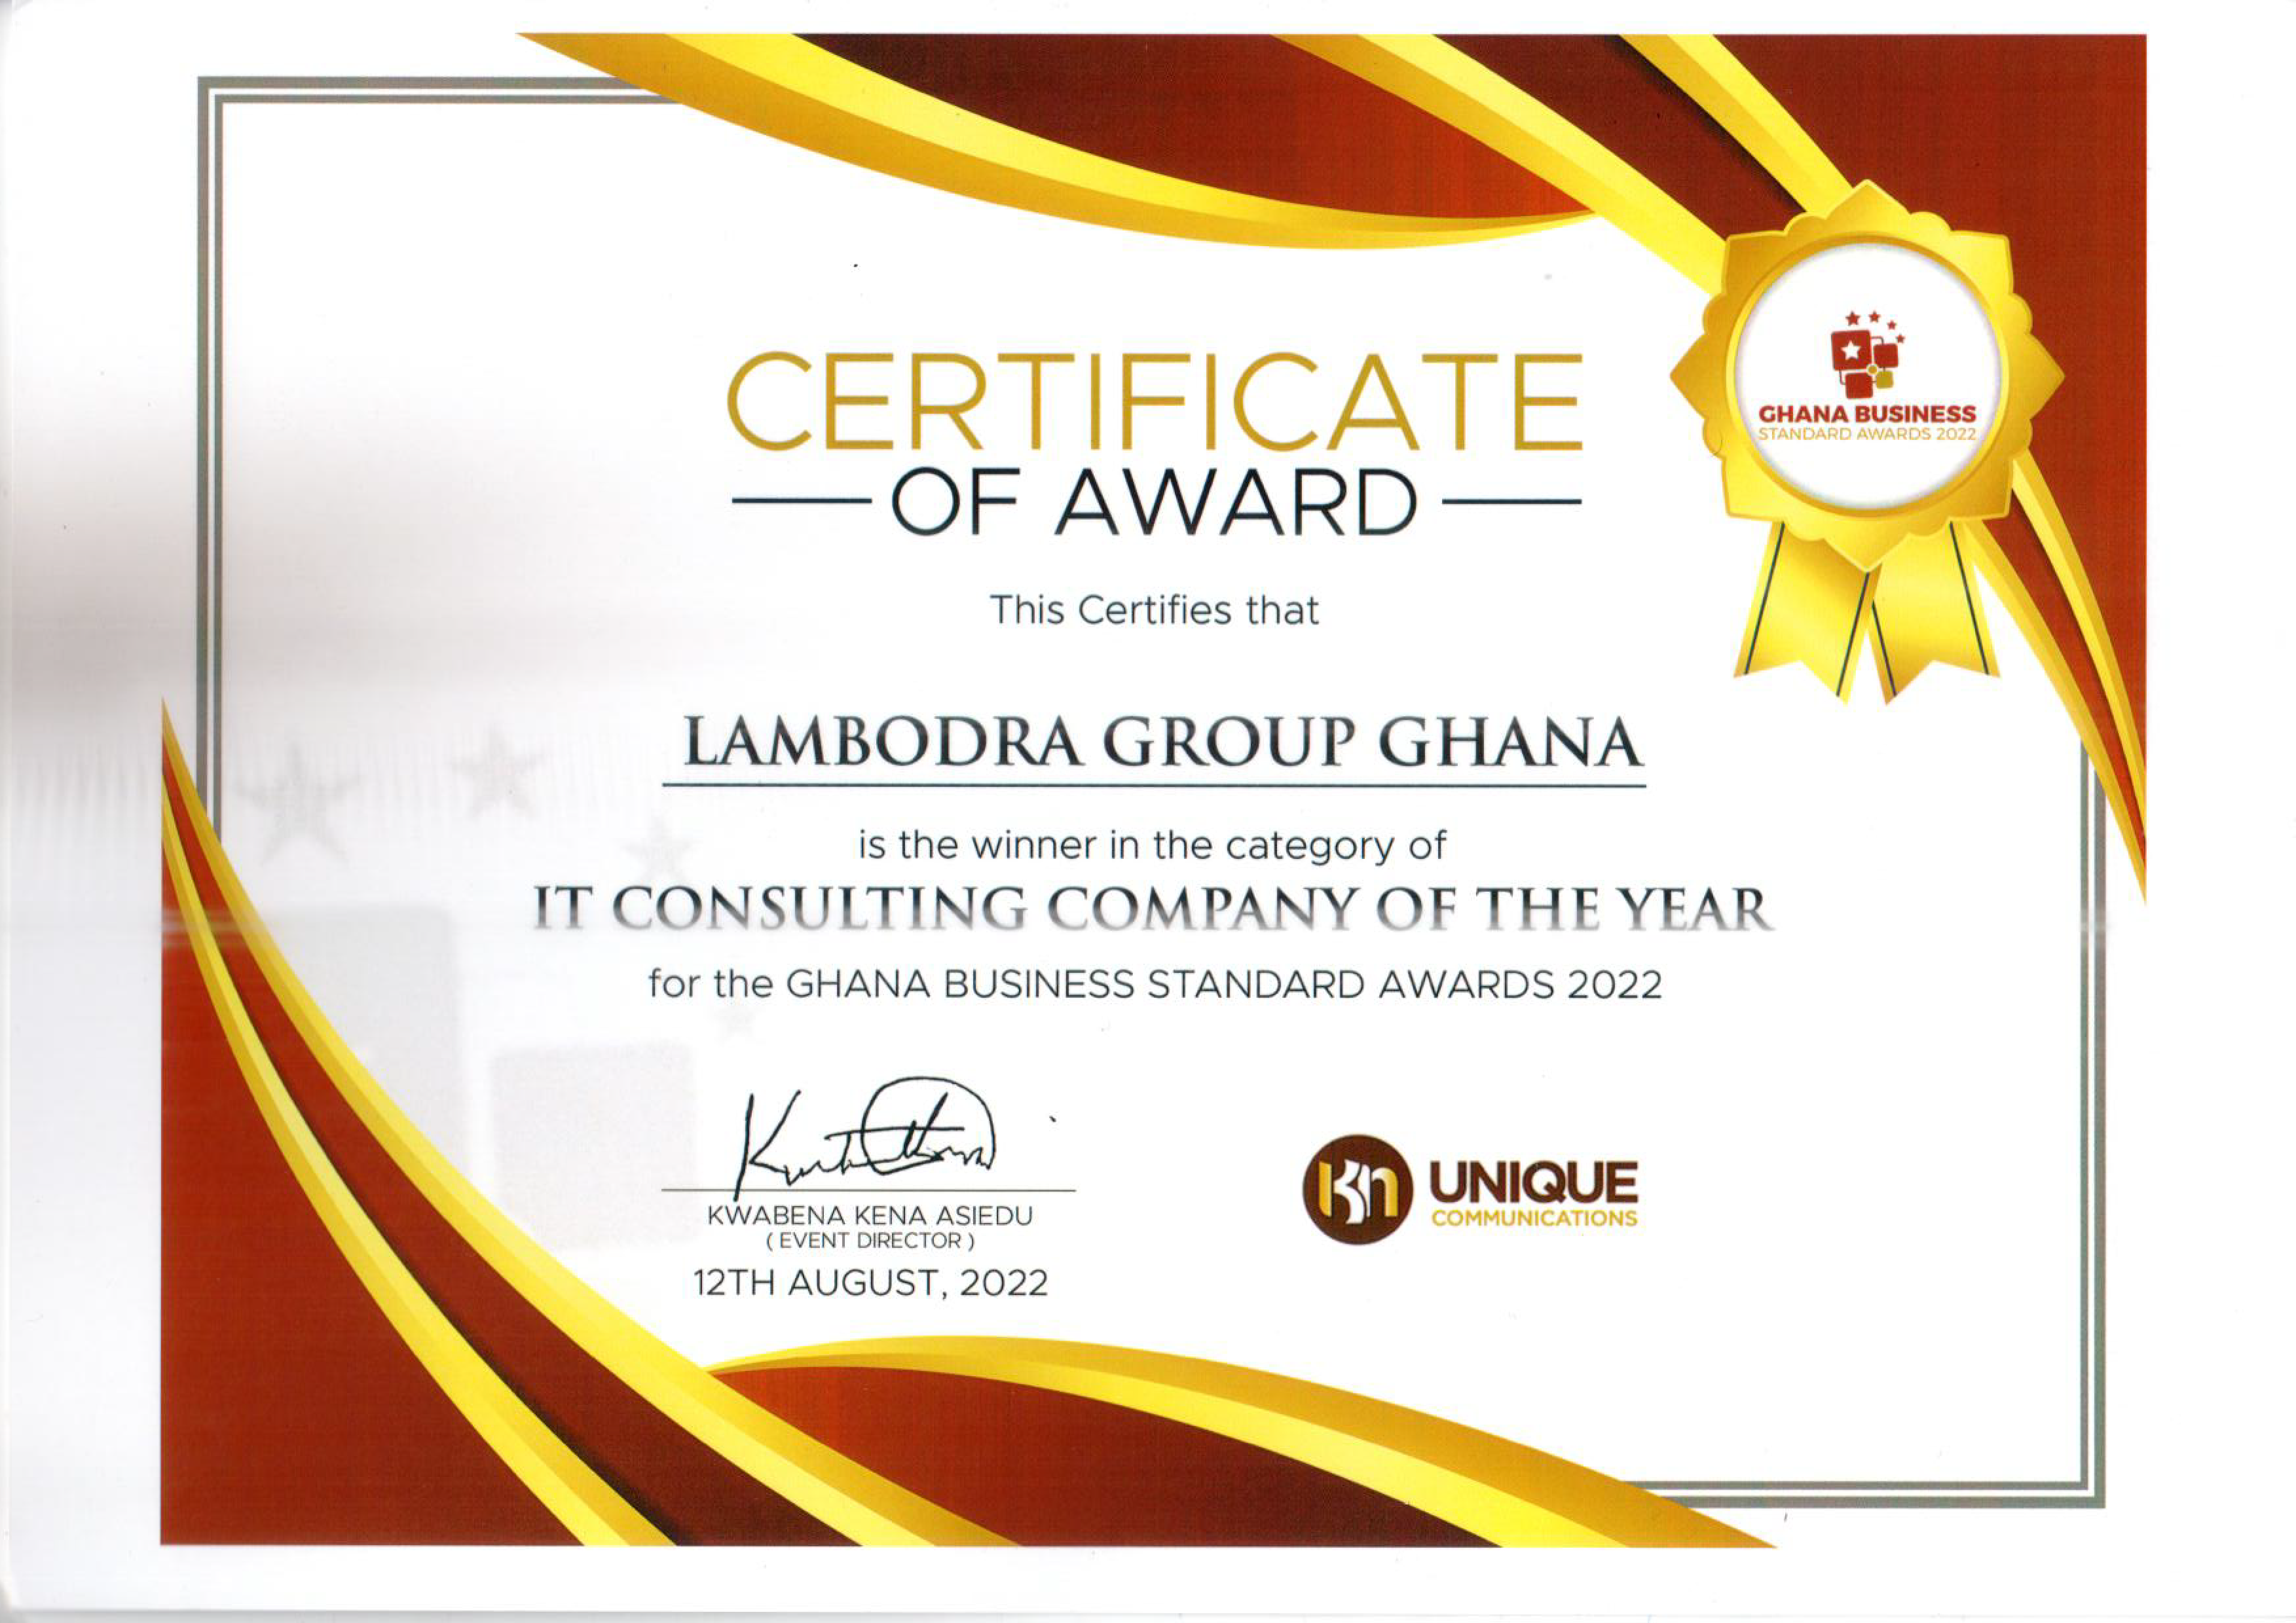 Lambodra group - Award wining Certificate 2